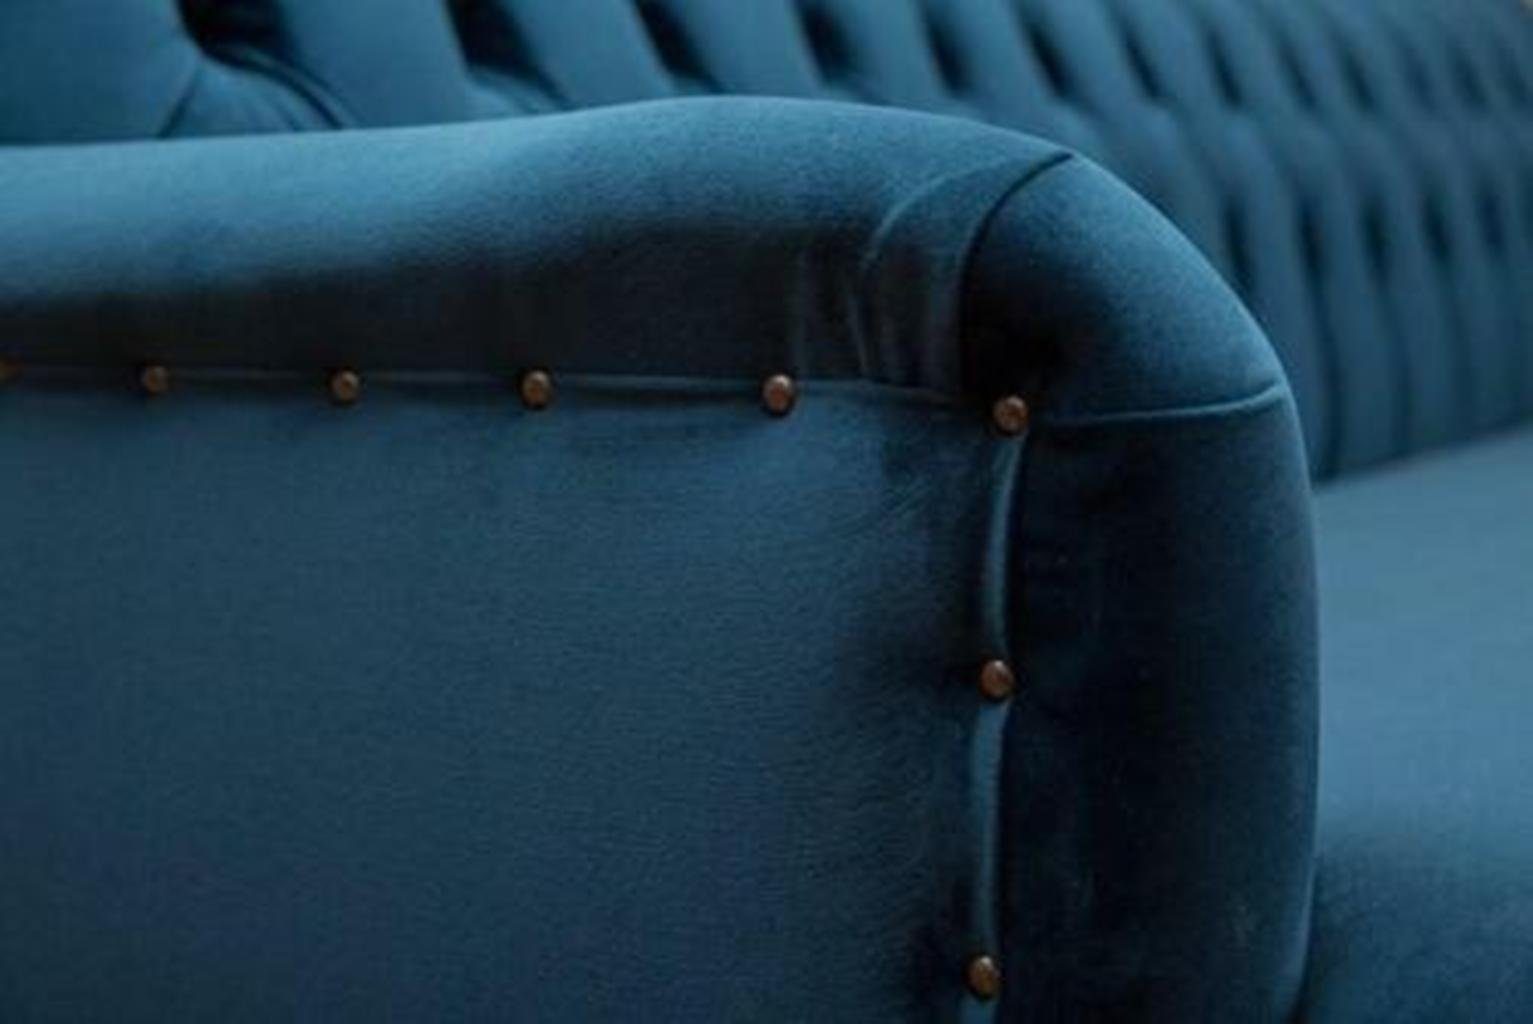 Sitzer Big Couch 4 XXL Couchen Textil Chesterfield Blaue Sofa Chesterfield-Sofa, JVmoebel